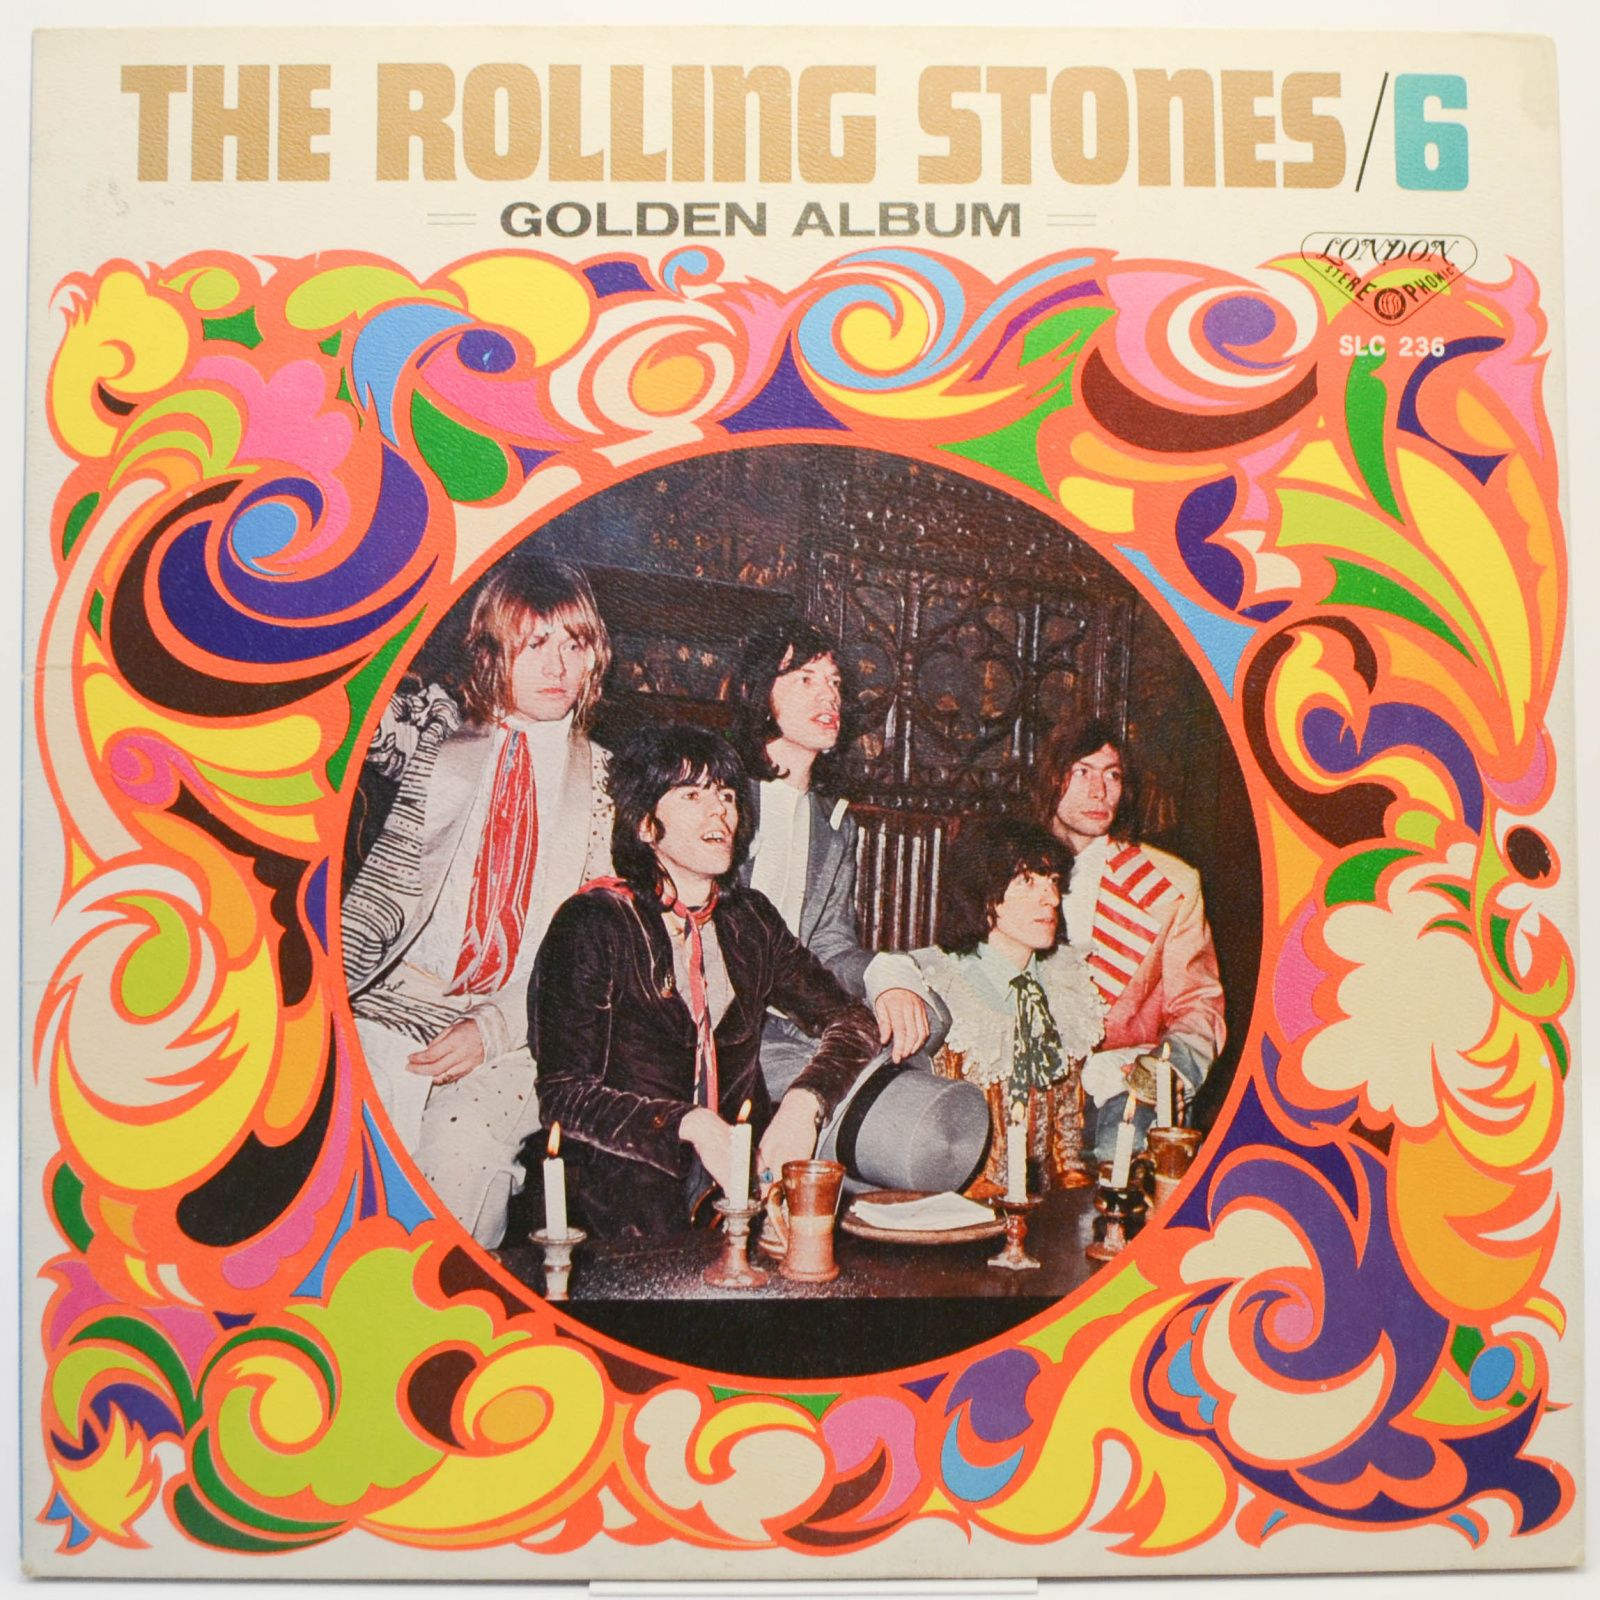 The Rolling Stones 6 - Golden Album, 1966